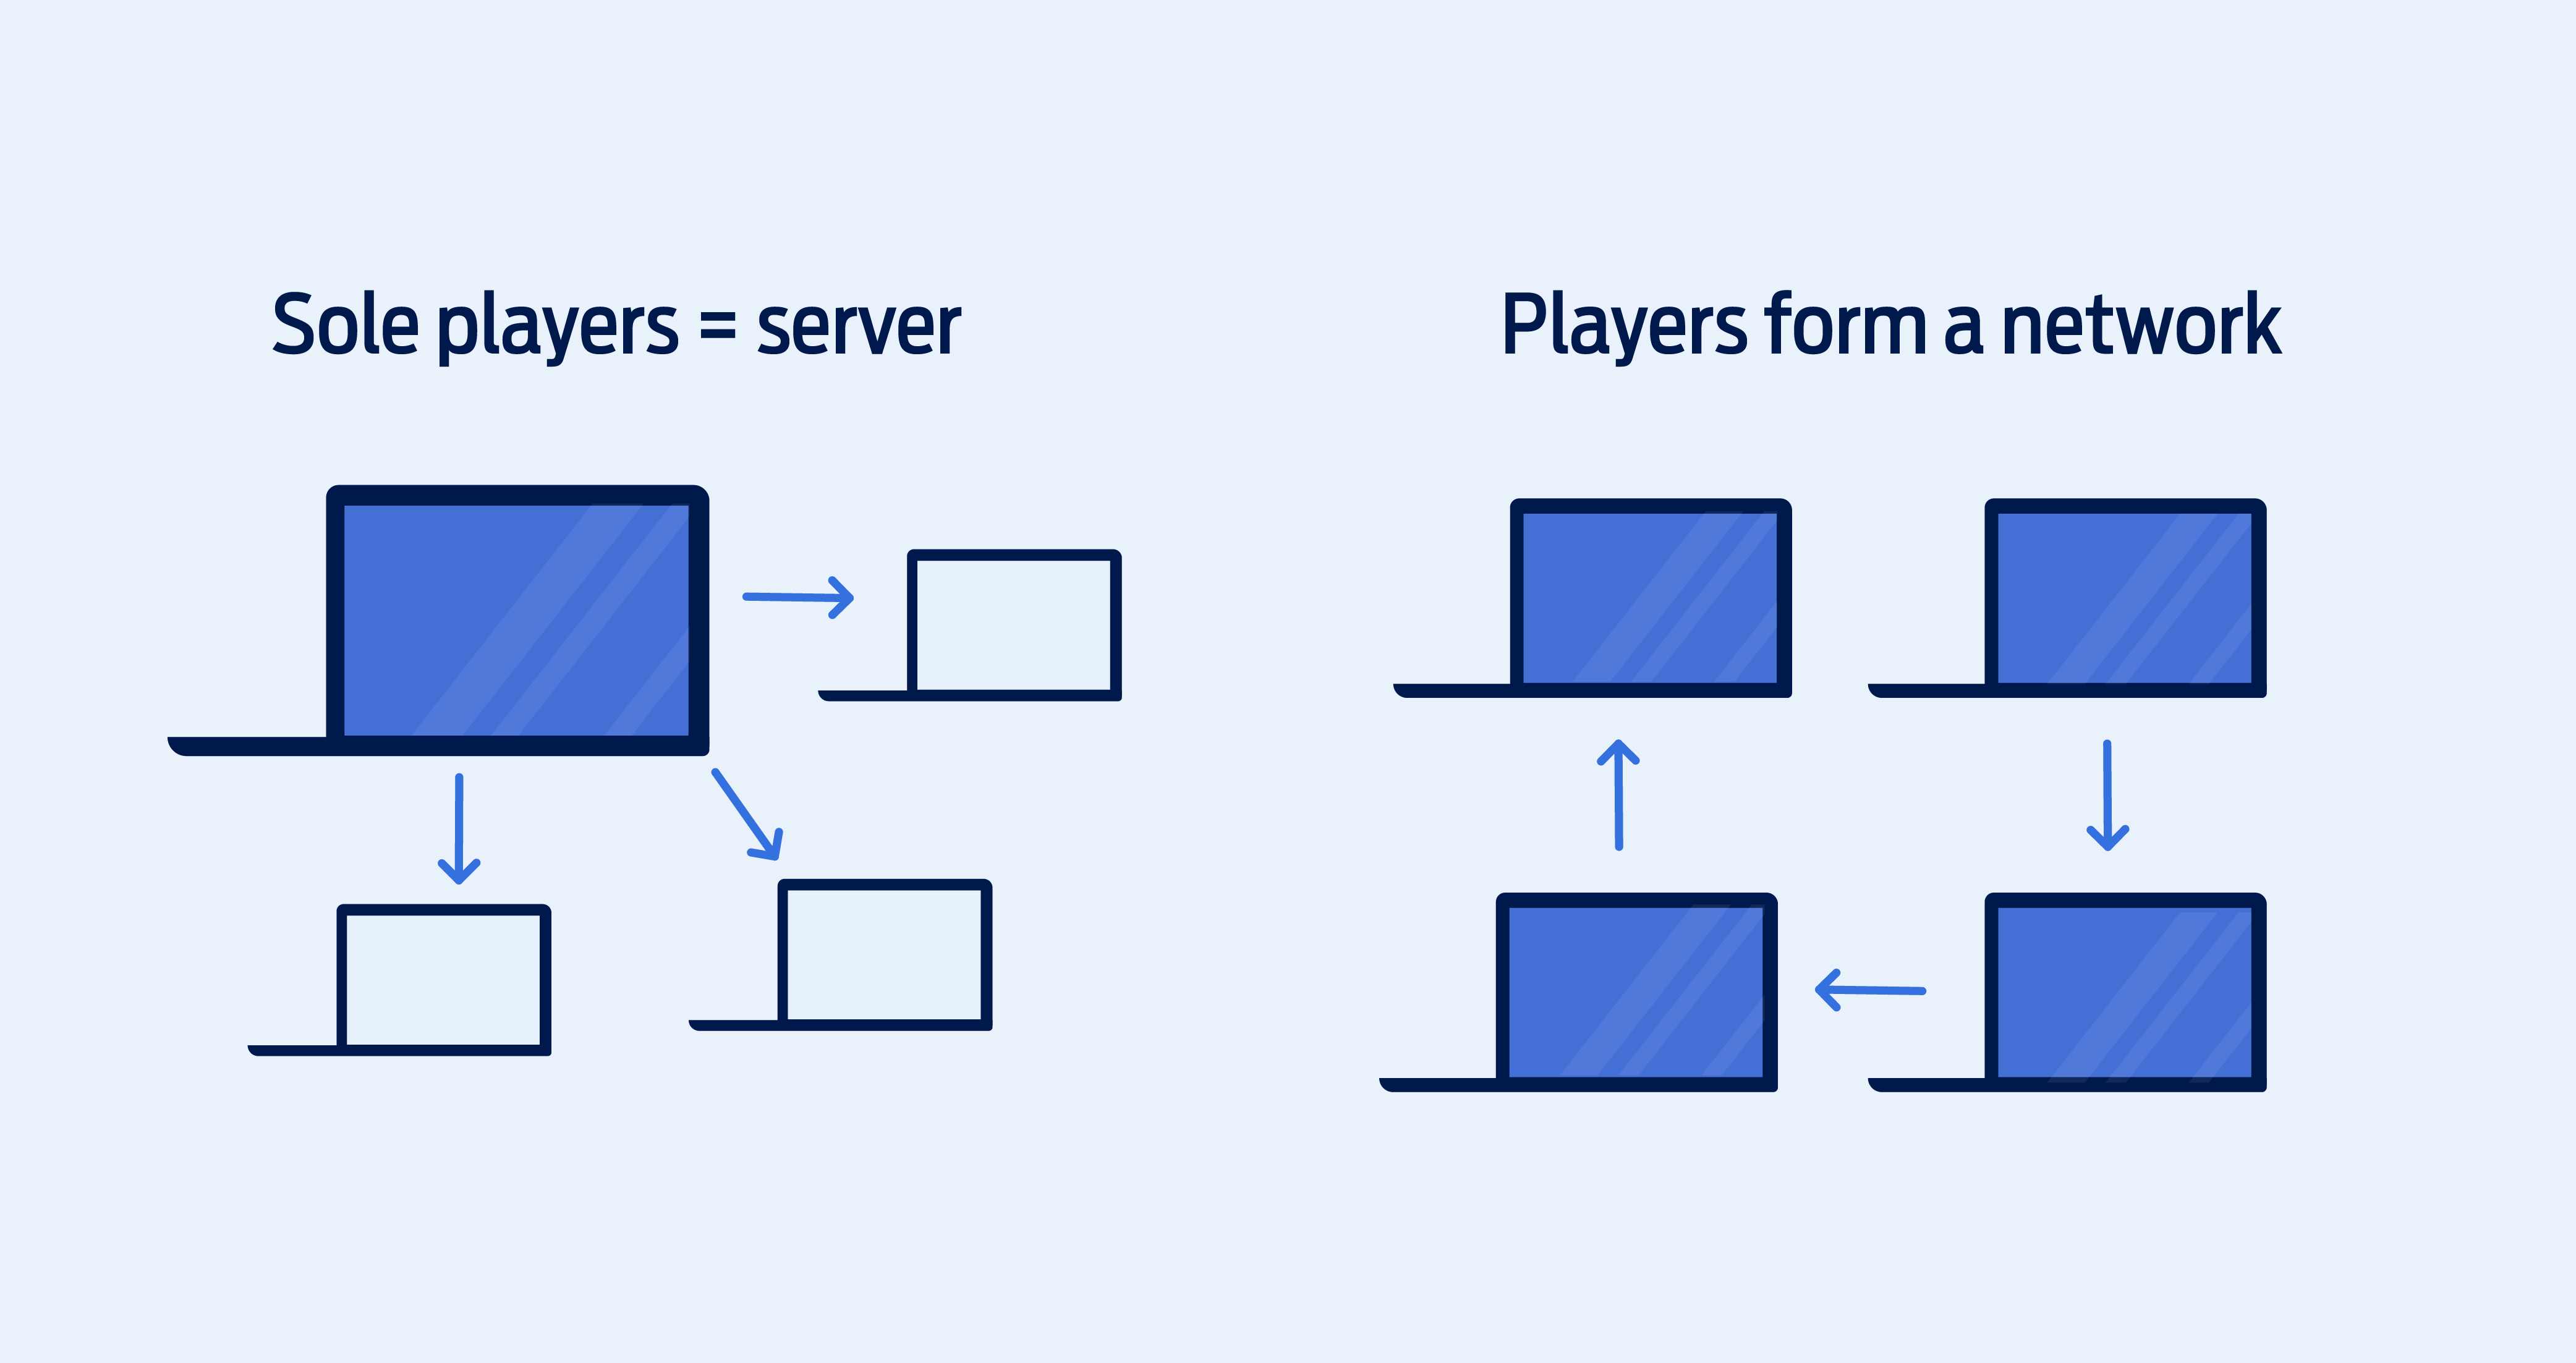 Peer-to-peer gaming network structures